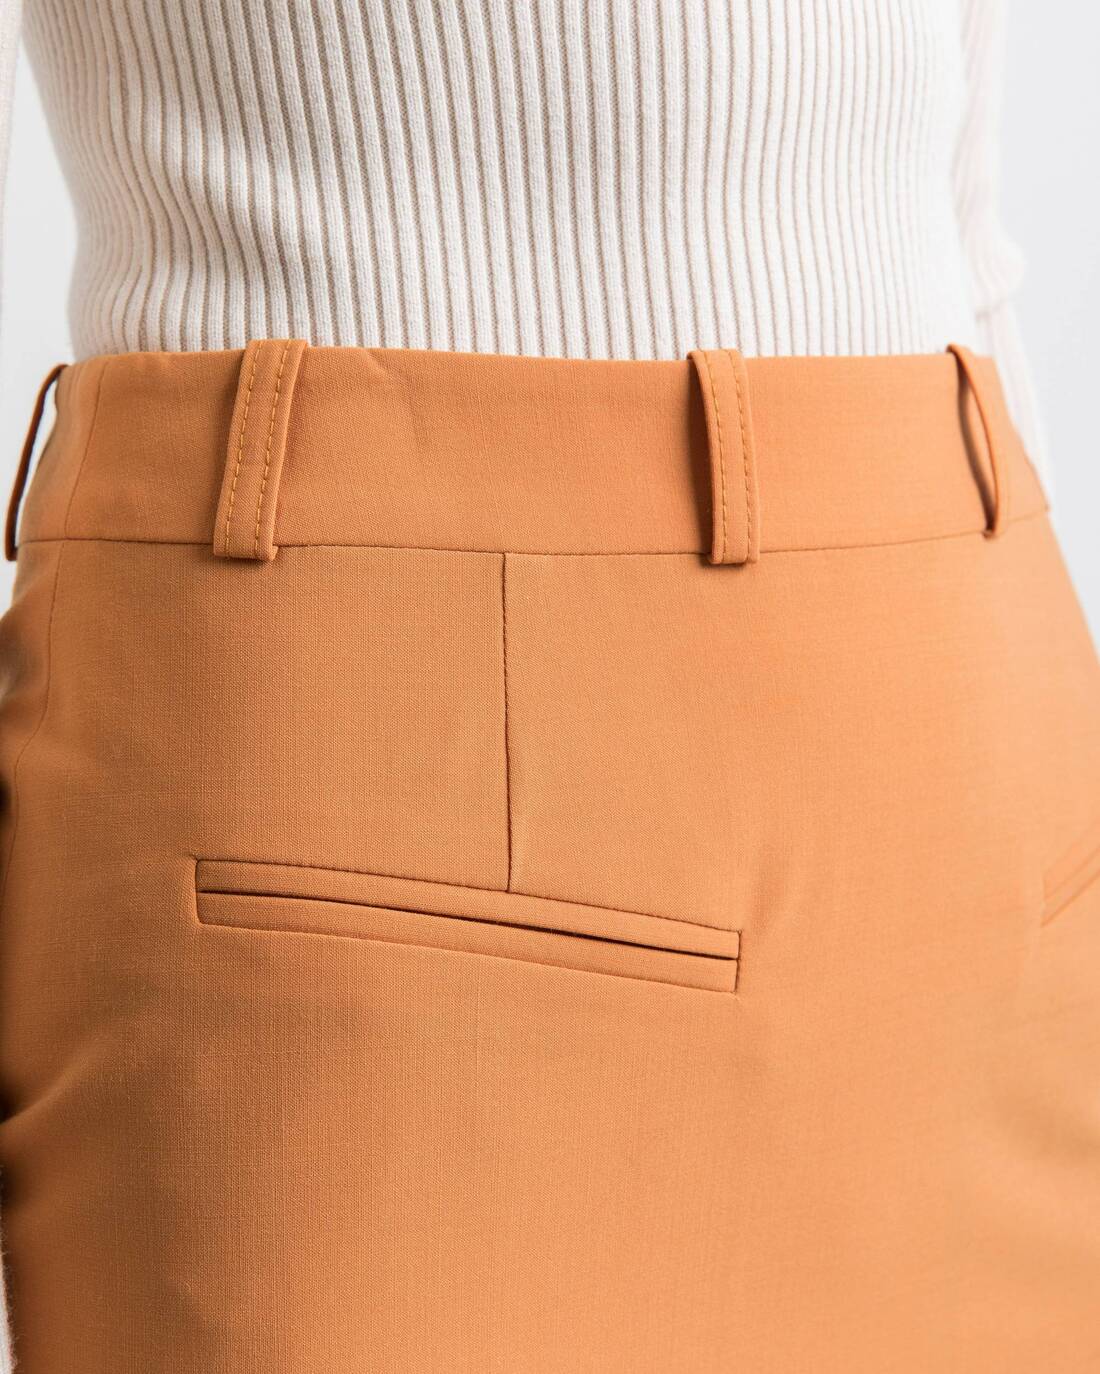 Upside down mini skirt